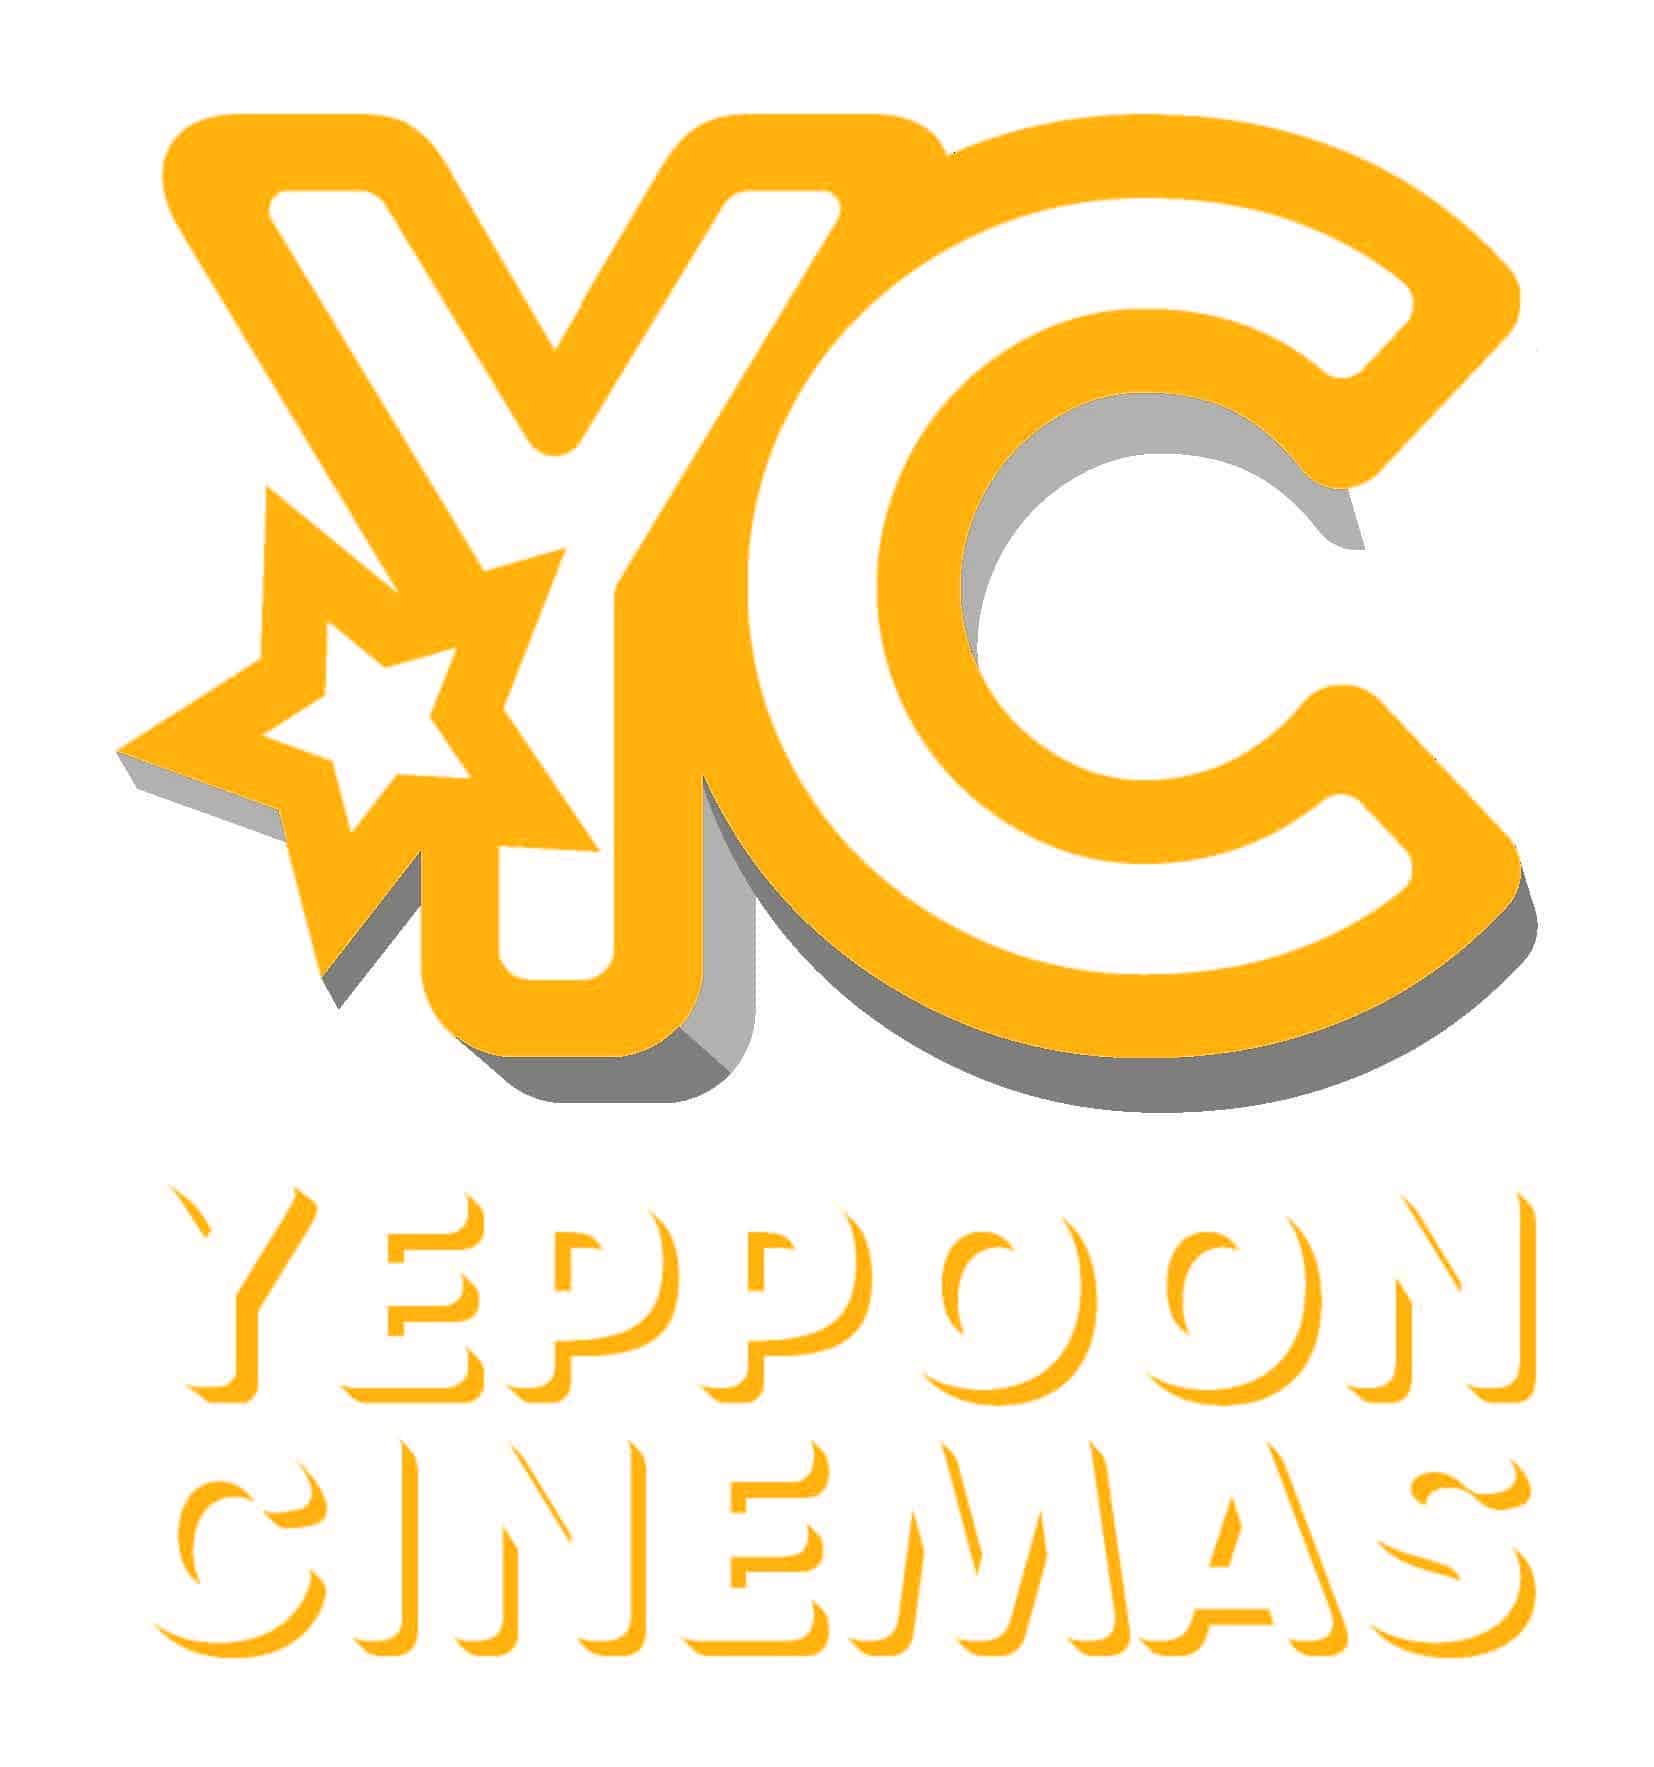 Yeppoon-Cinemas-logo